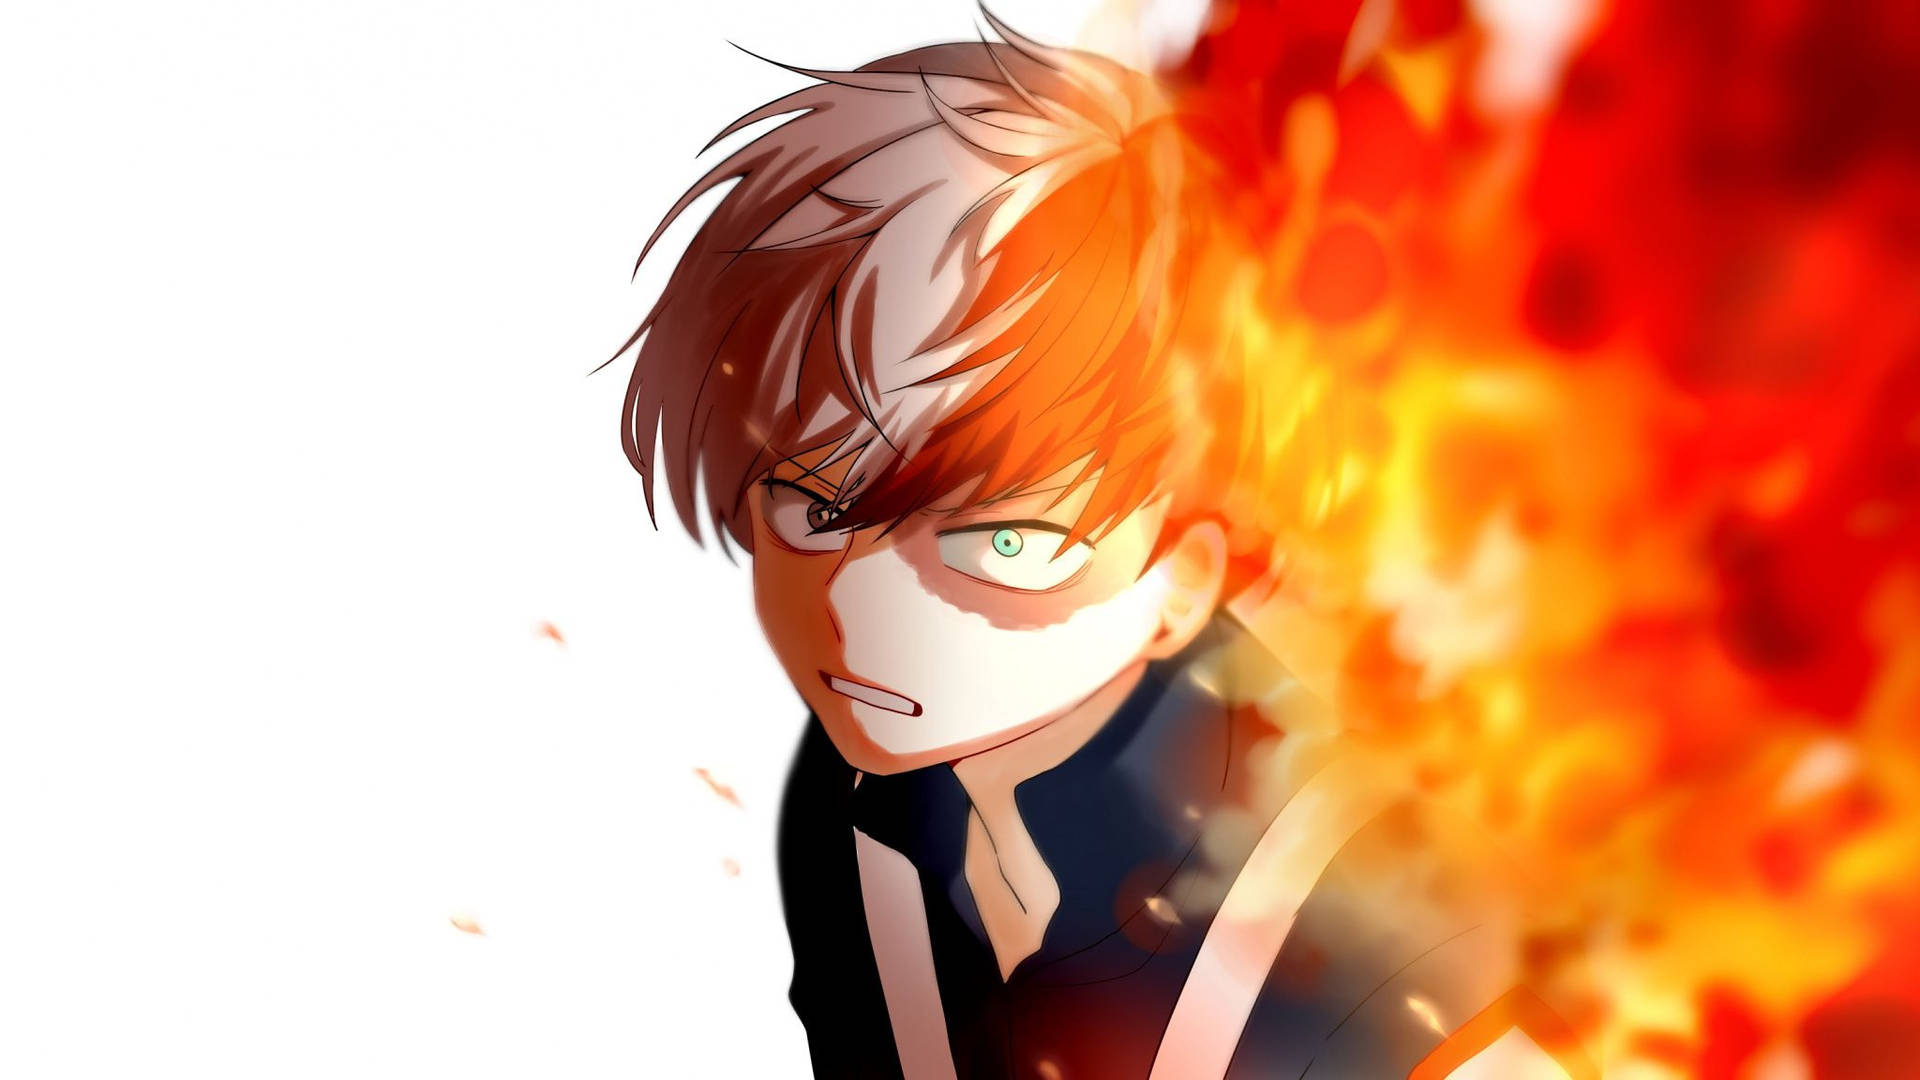 Shotofire Anime Power: Shoto Feuer Anime Power Wallpaper